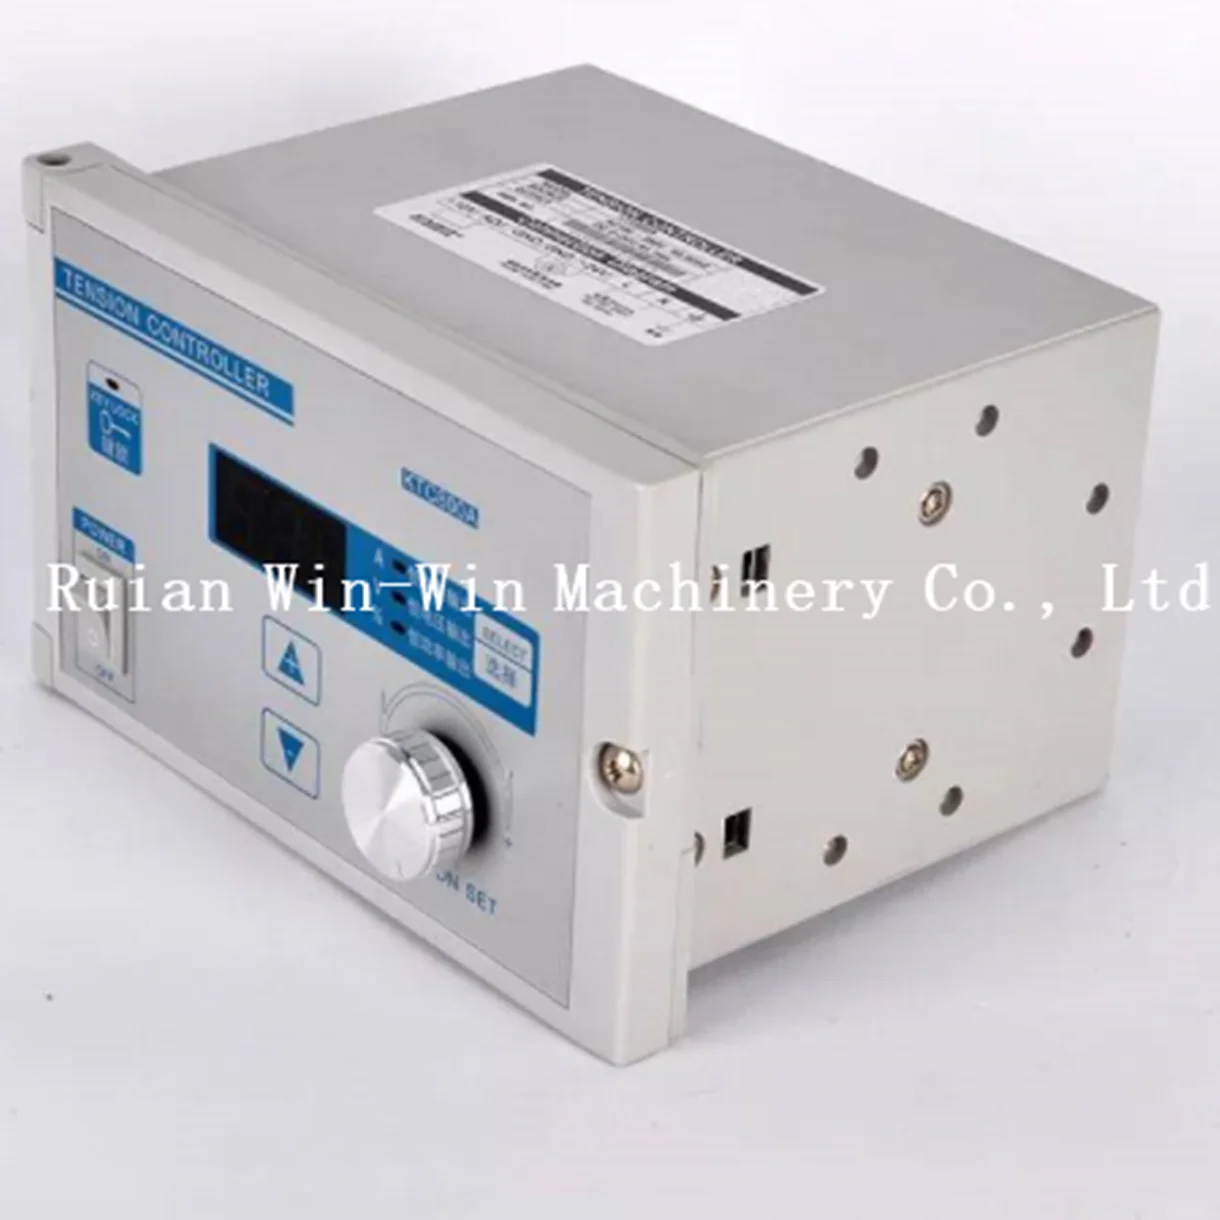 Manual Digital Tension Controller KTC800A